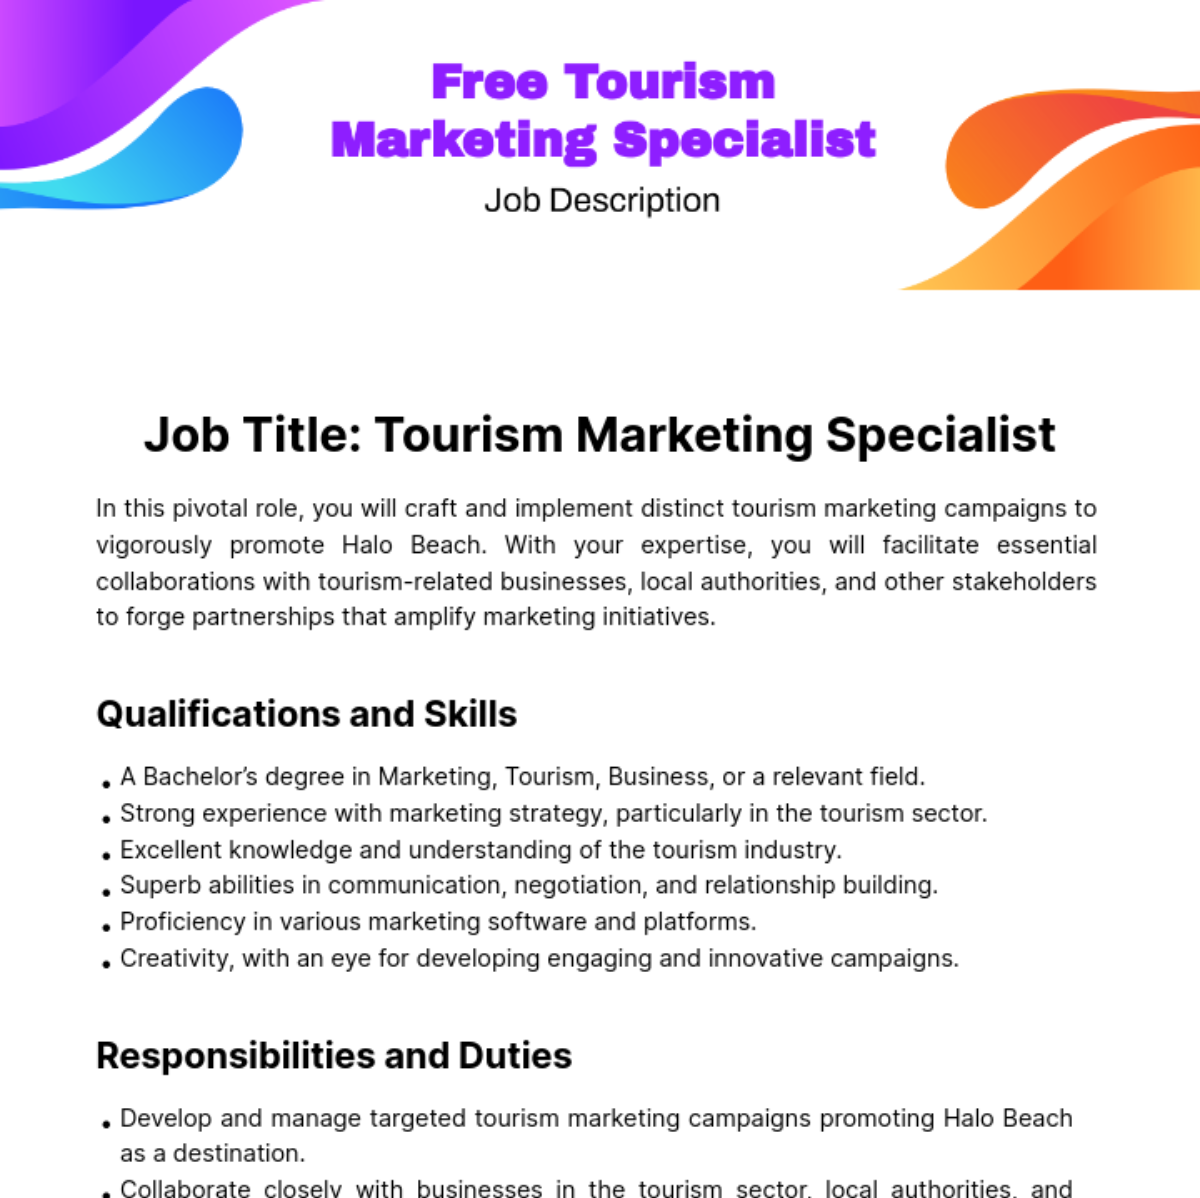 Free Tourism Marketing Specialist Job Description Template